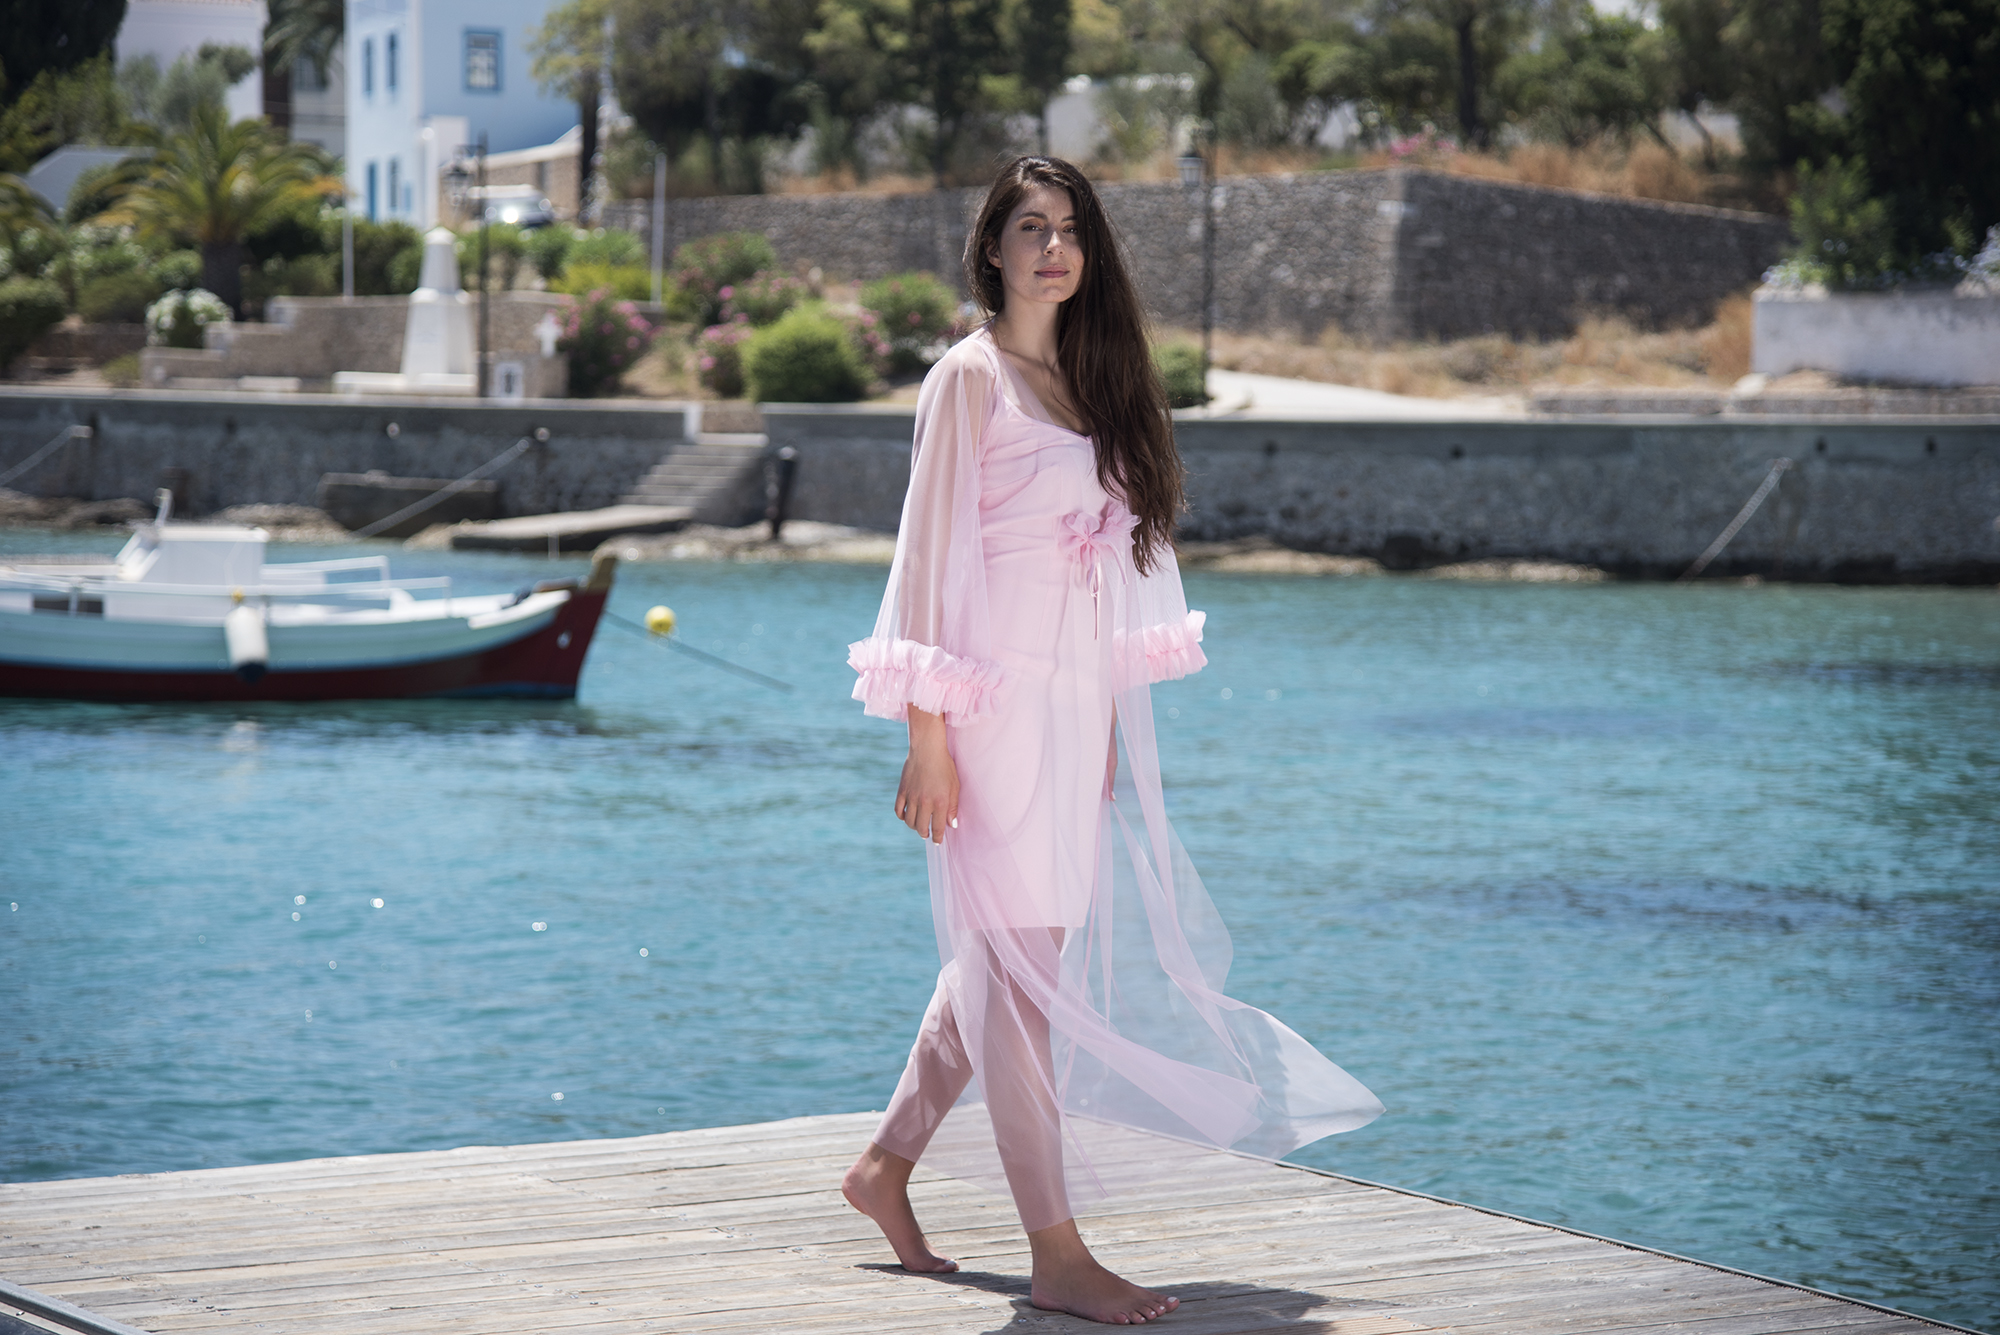 Aνακαλύψαμε ένα νέο, ελληνικό fashion brand που μας οδηγεί κατευθείαν στην «πηγή της ζωής»